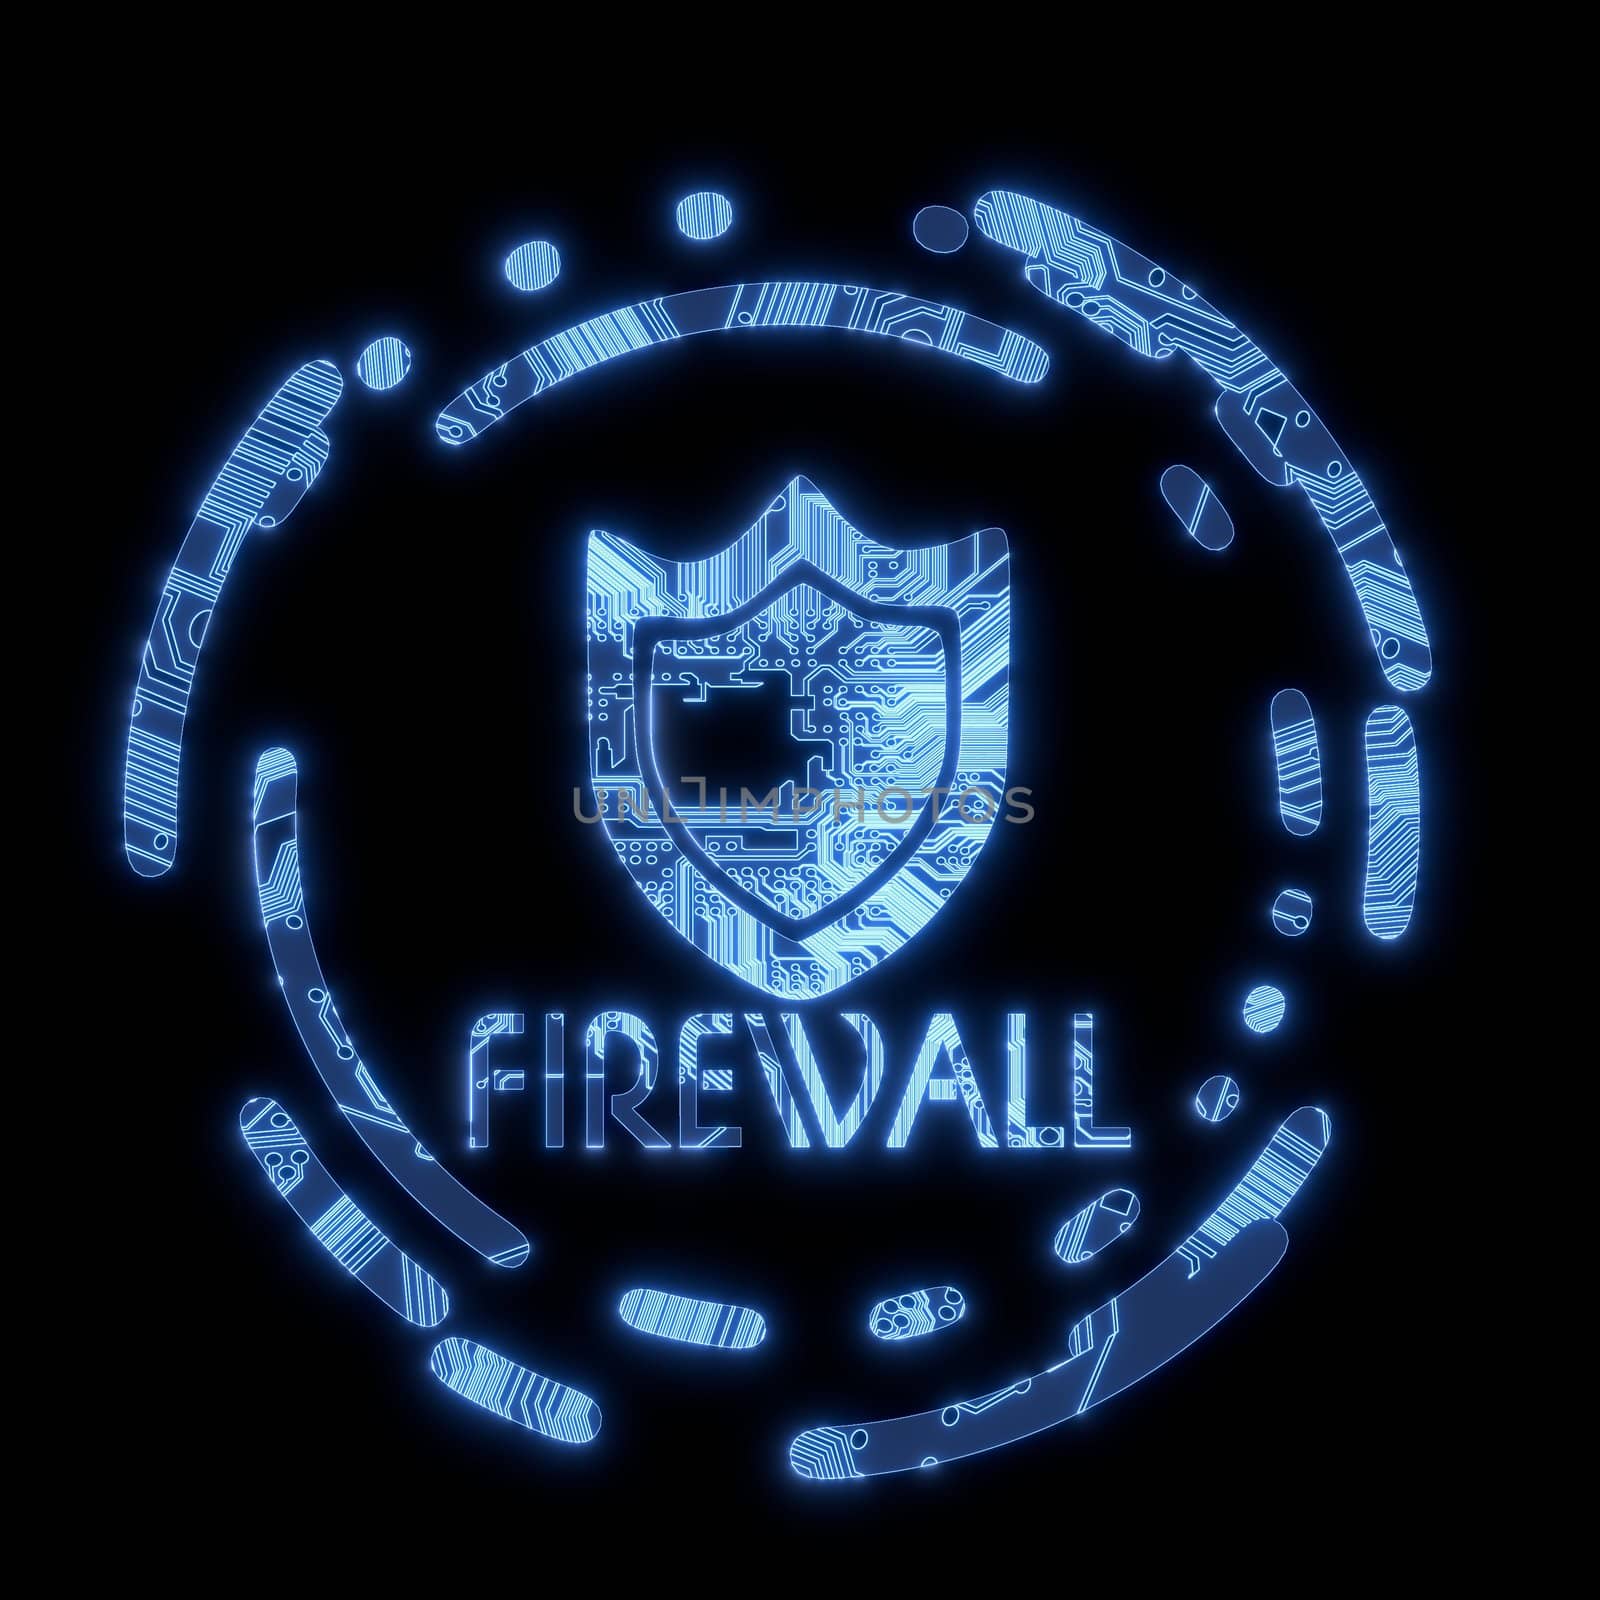 Illuminated blue flare firewall symbol on a computer chip by onirb